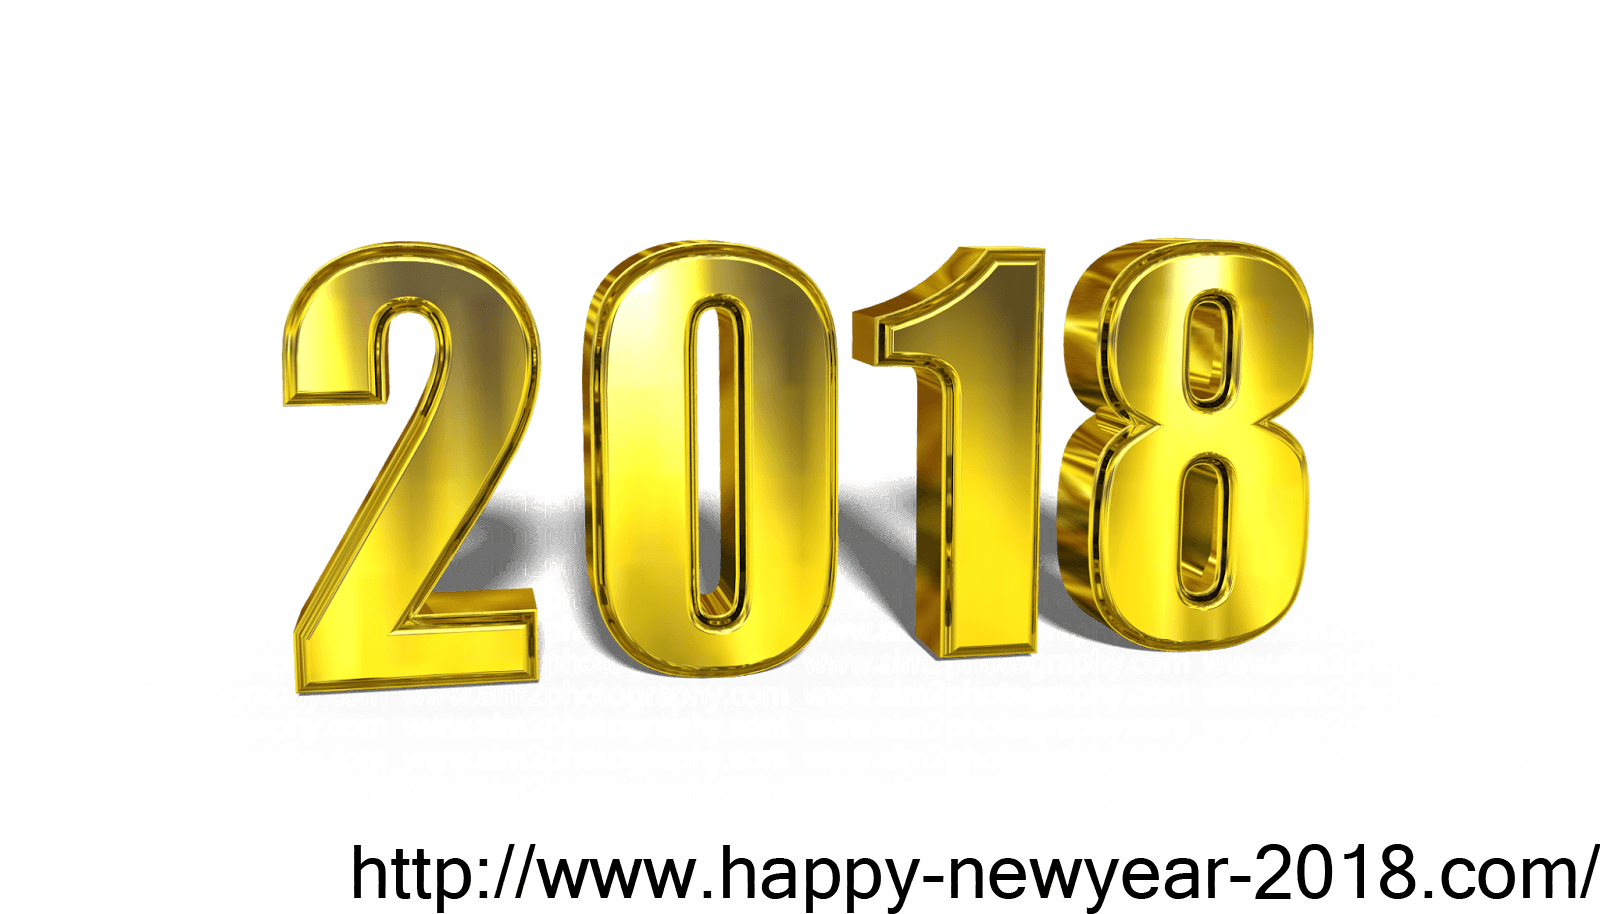 New Year 2018 Logo - calendarcraft | New Year 2018 Wishes Image 995